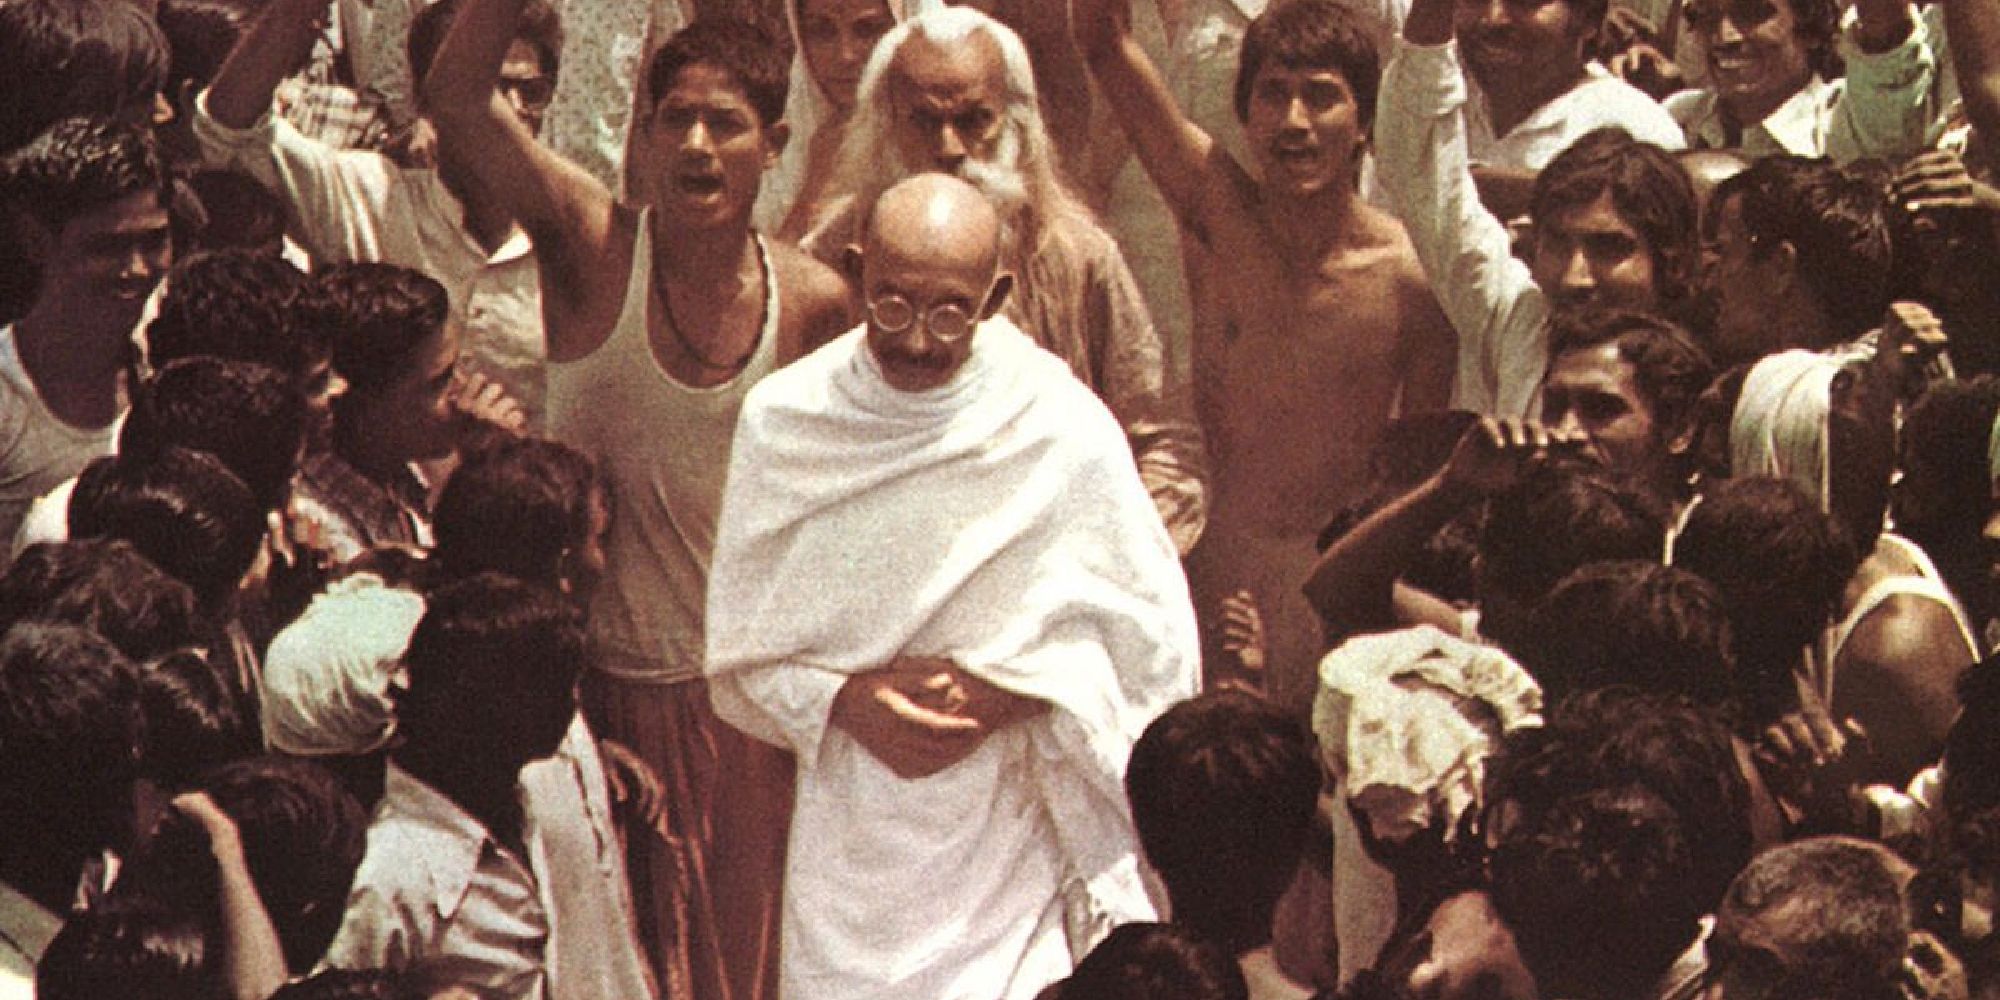 Gandhi walking through a crowd in the film 'Gandhi'